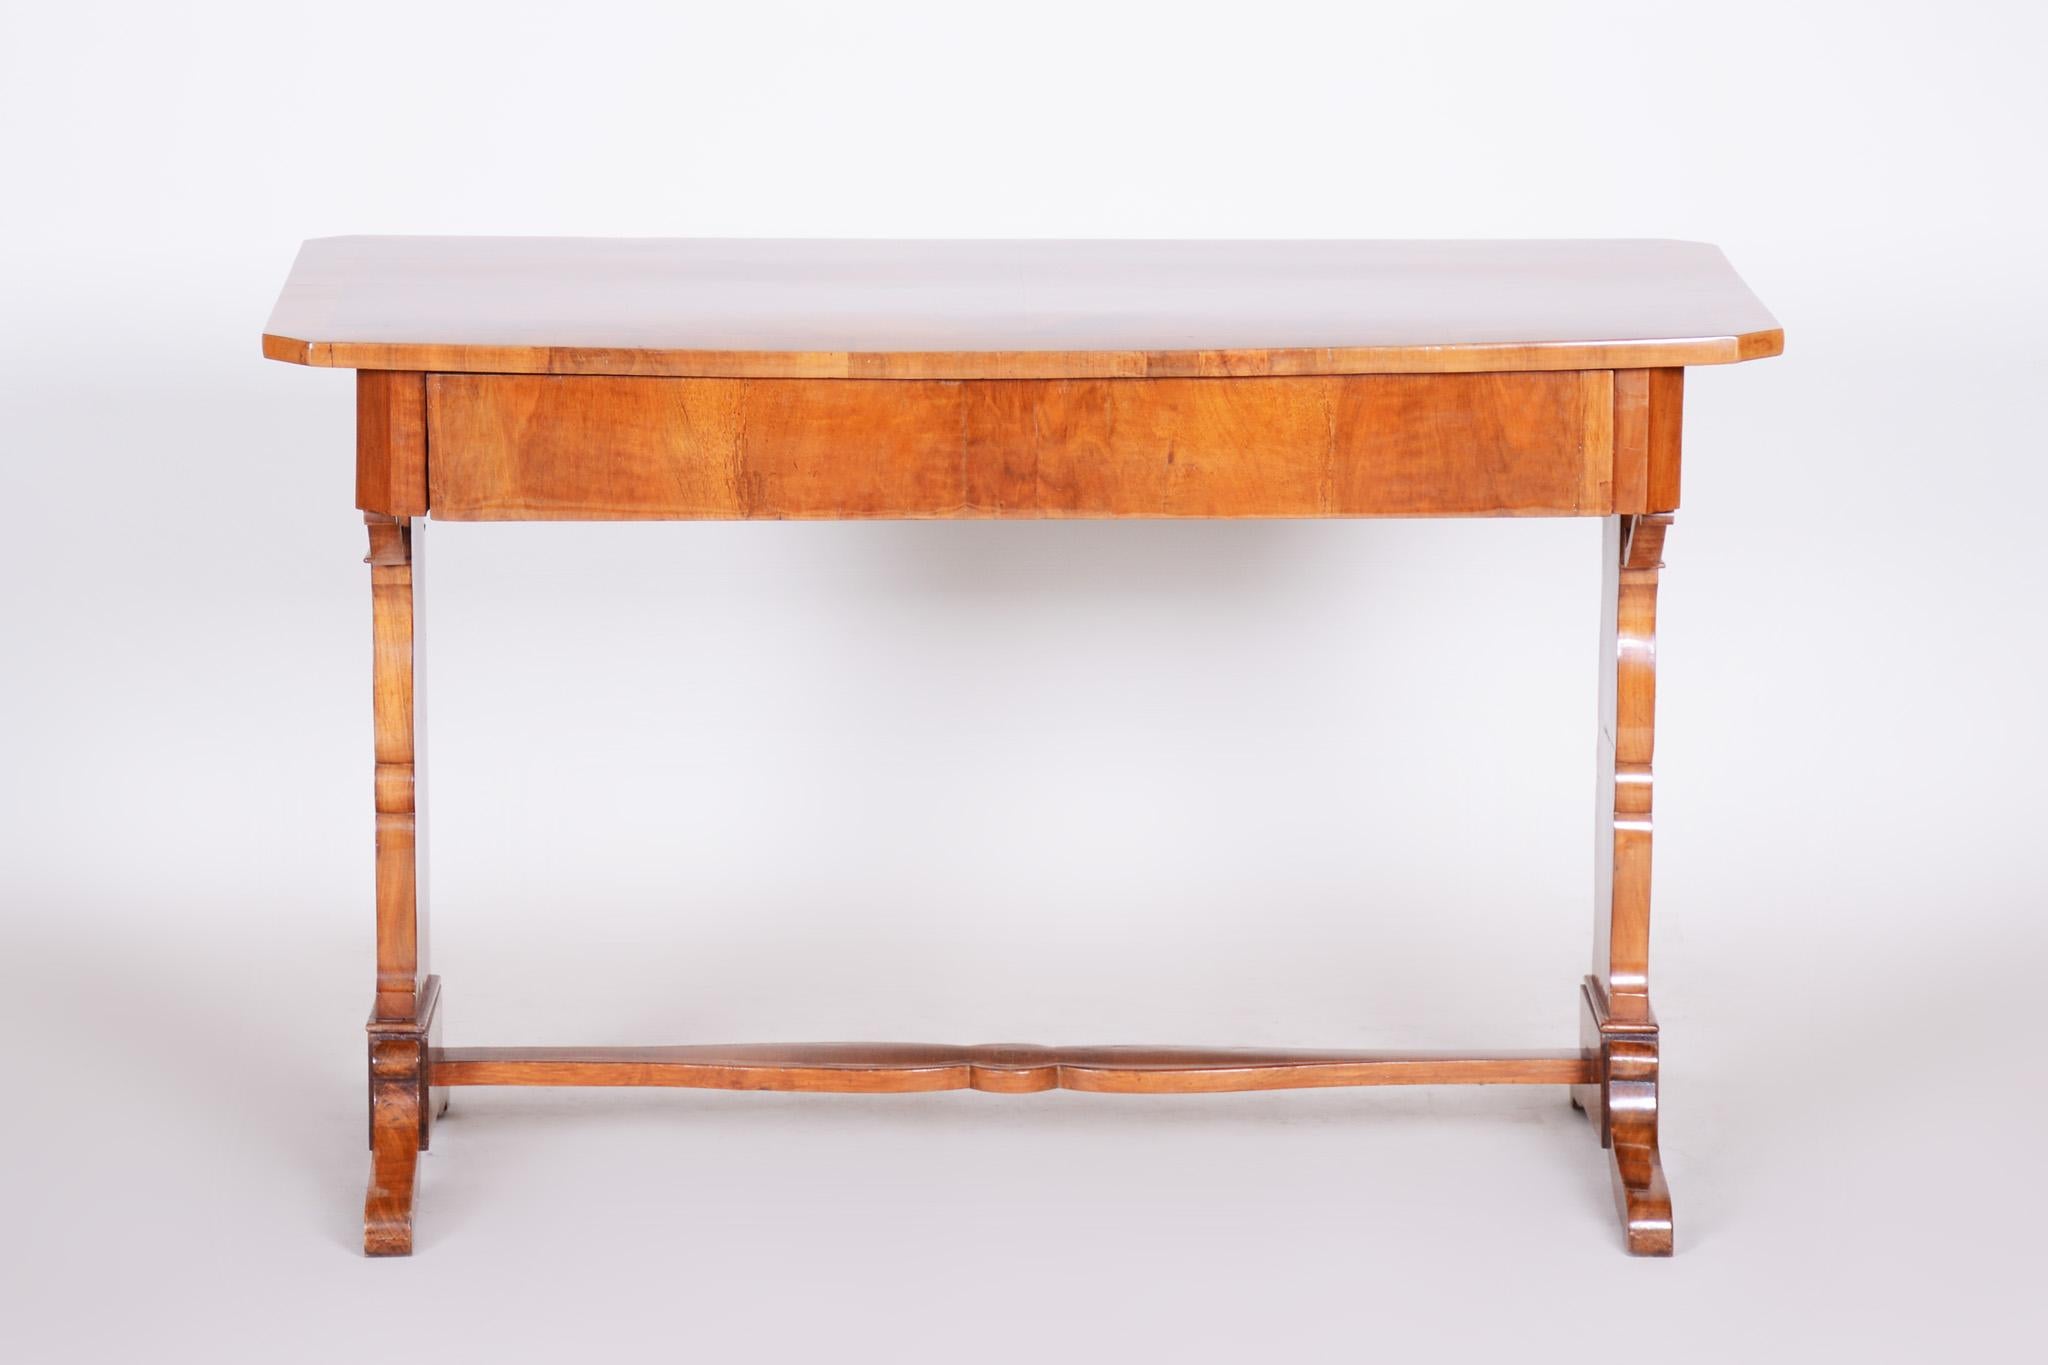 Biedermeier table - Writing desk
Completely restored.
Shellac polish.
Material: Walnut veneer, lacquer
Source: Czechia (Bohemia)
Period: 1840-1849.